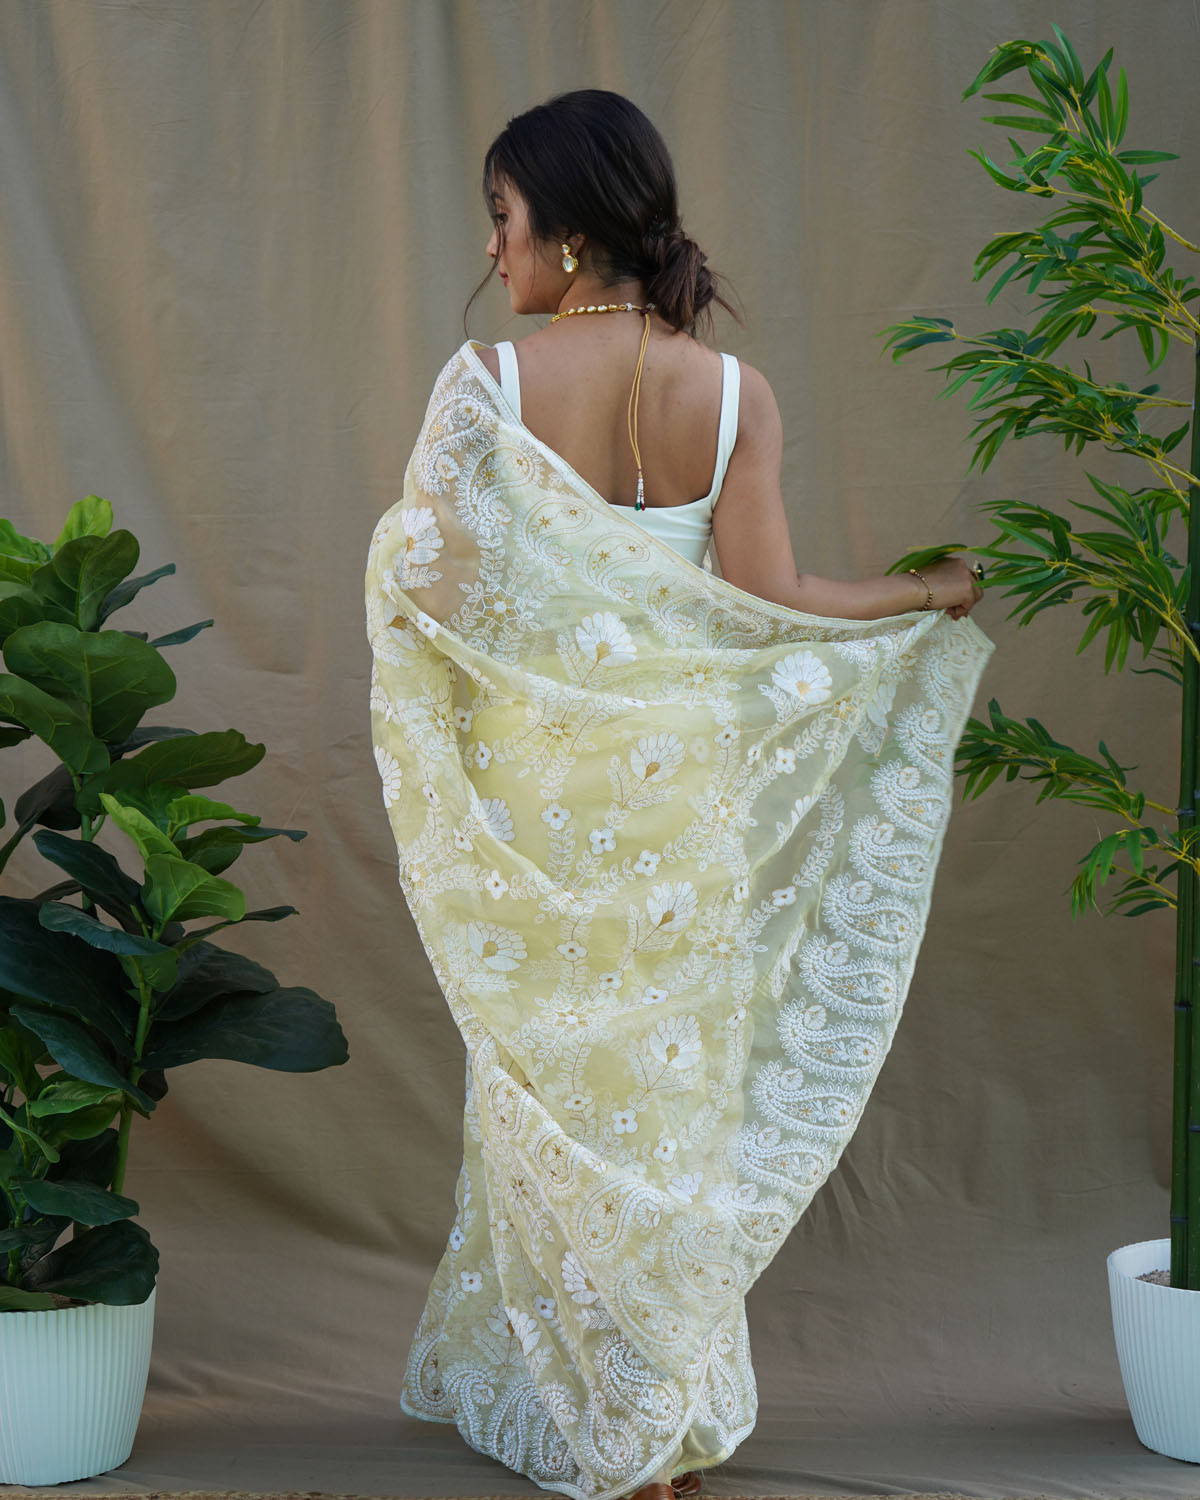 Premium Organza Silk Designer saree with Hand Embroidery Work- Yellow